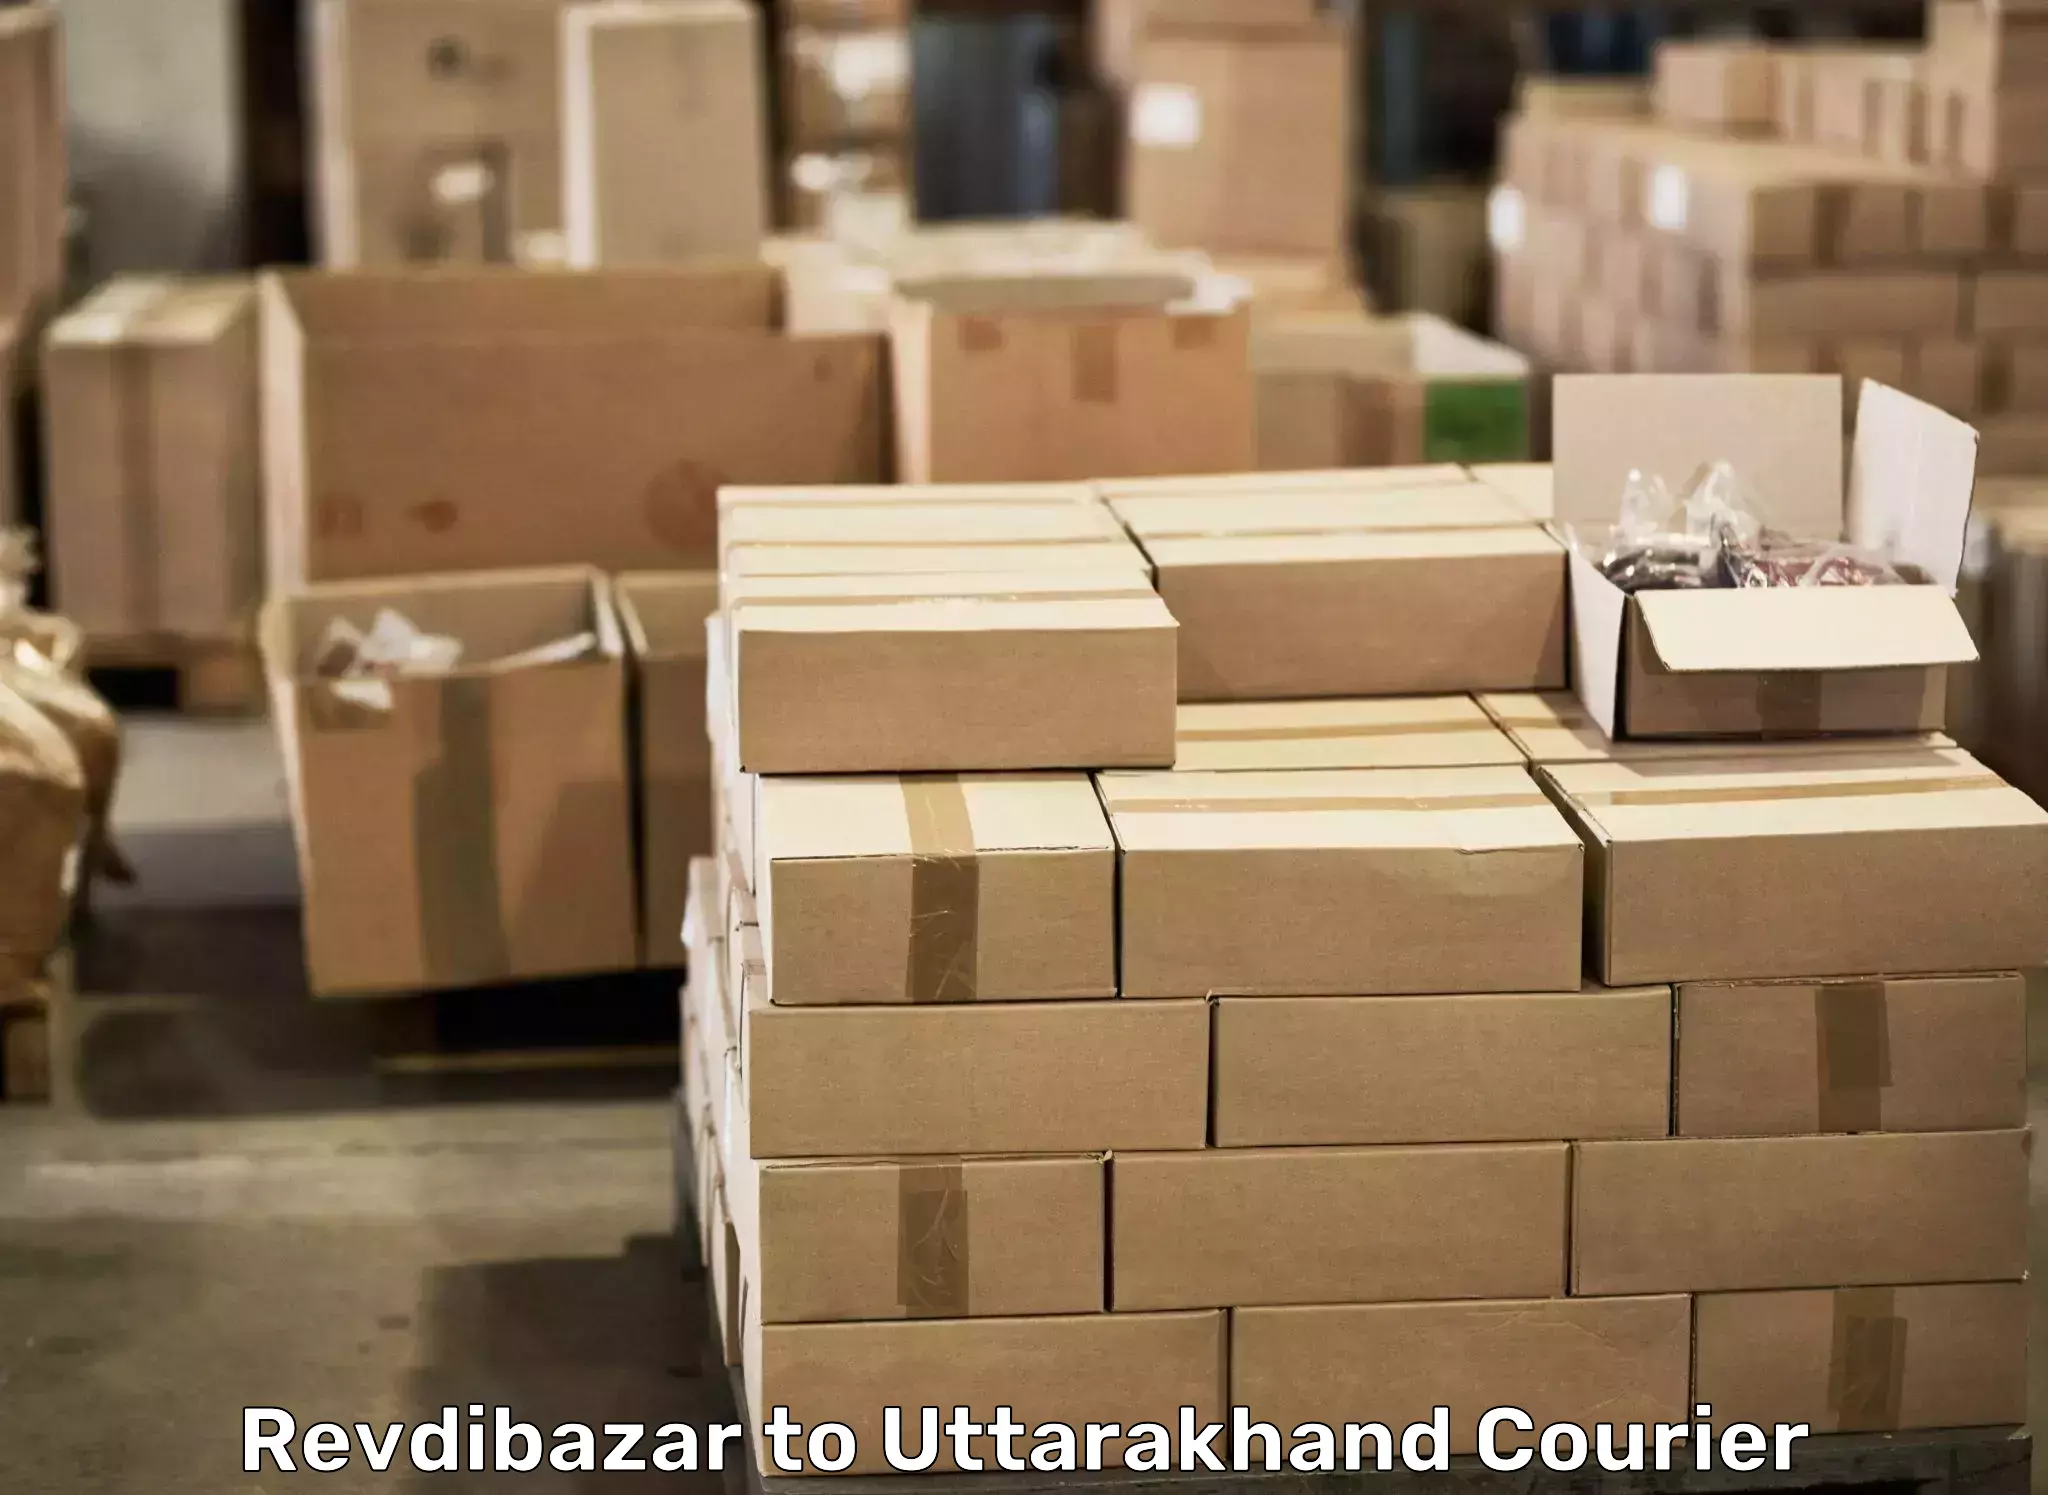 Skilled furniture transporters Revdibazar to Rishikesh